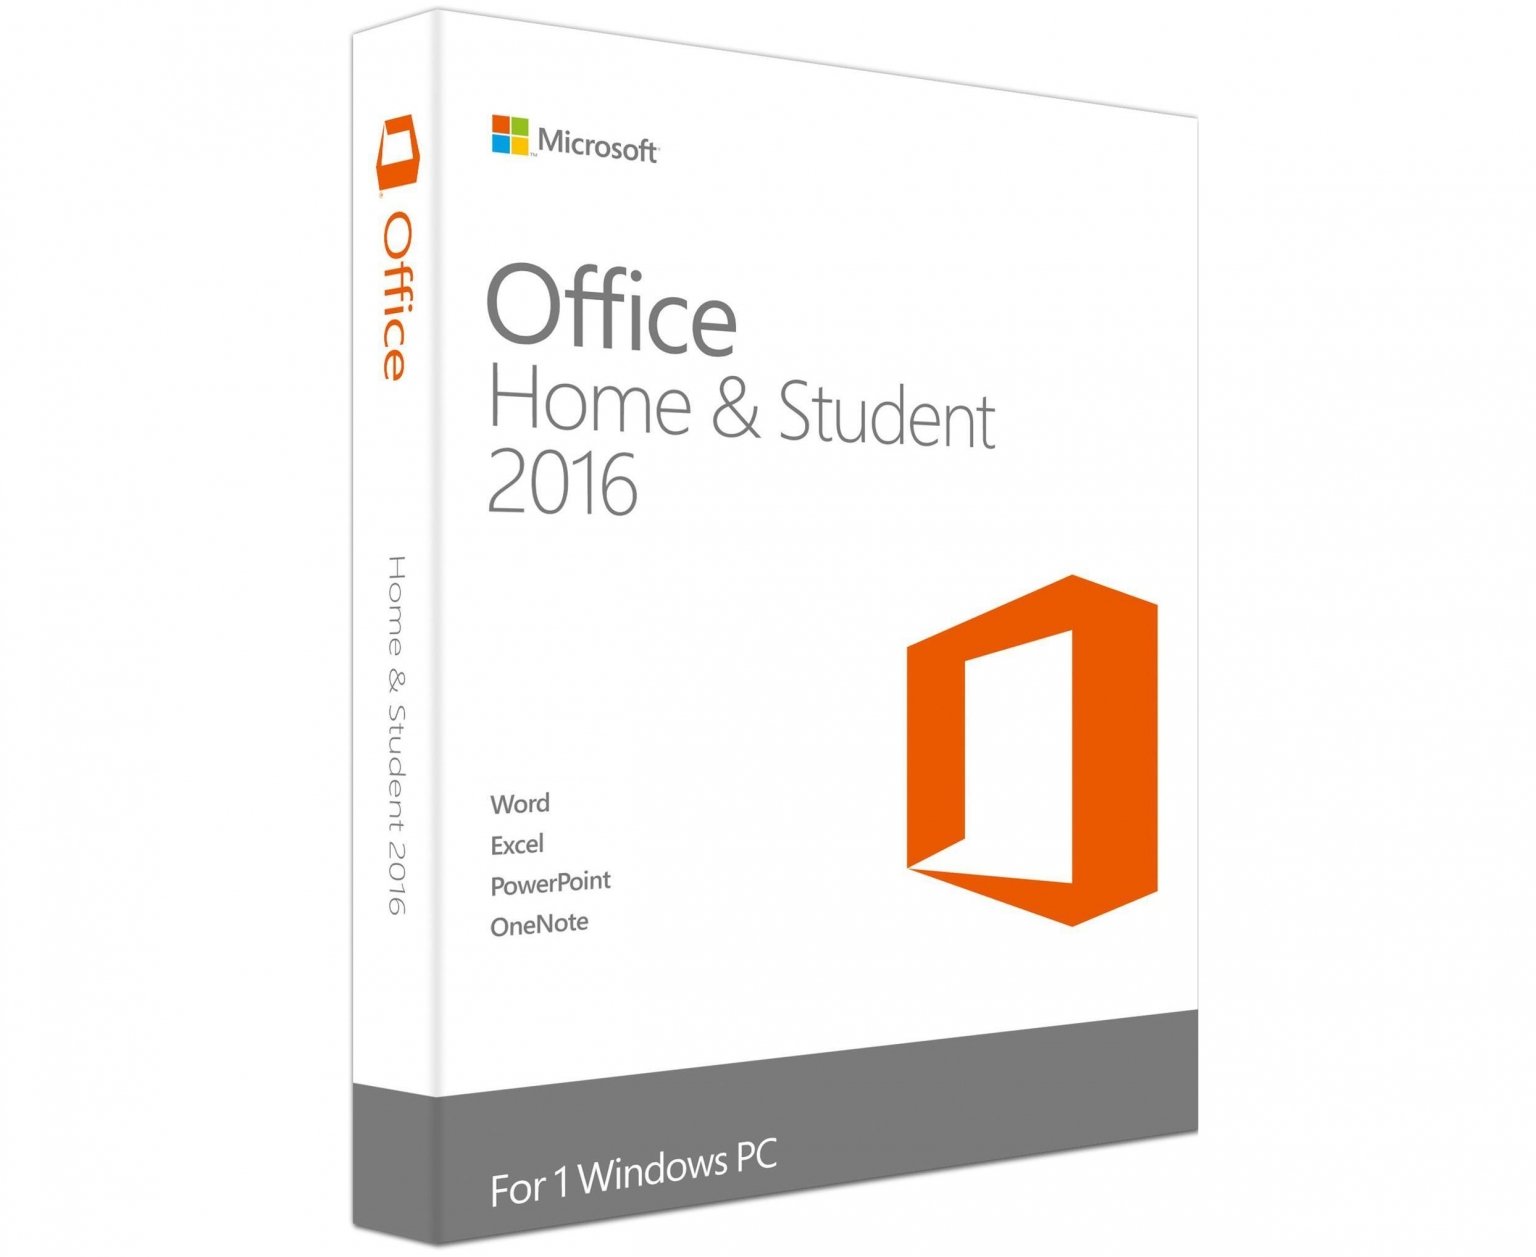 Microsoft Office Home & Student 2016 til Windows - officepakke.dkMicrosoft Office Home & Student 2016 til Windowsofficepakke.dkofficepakke.dk